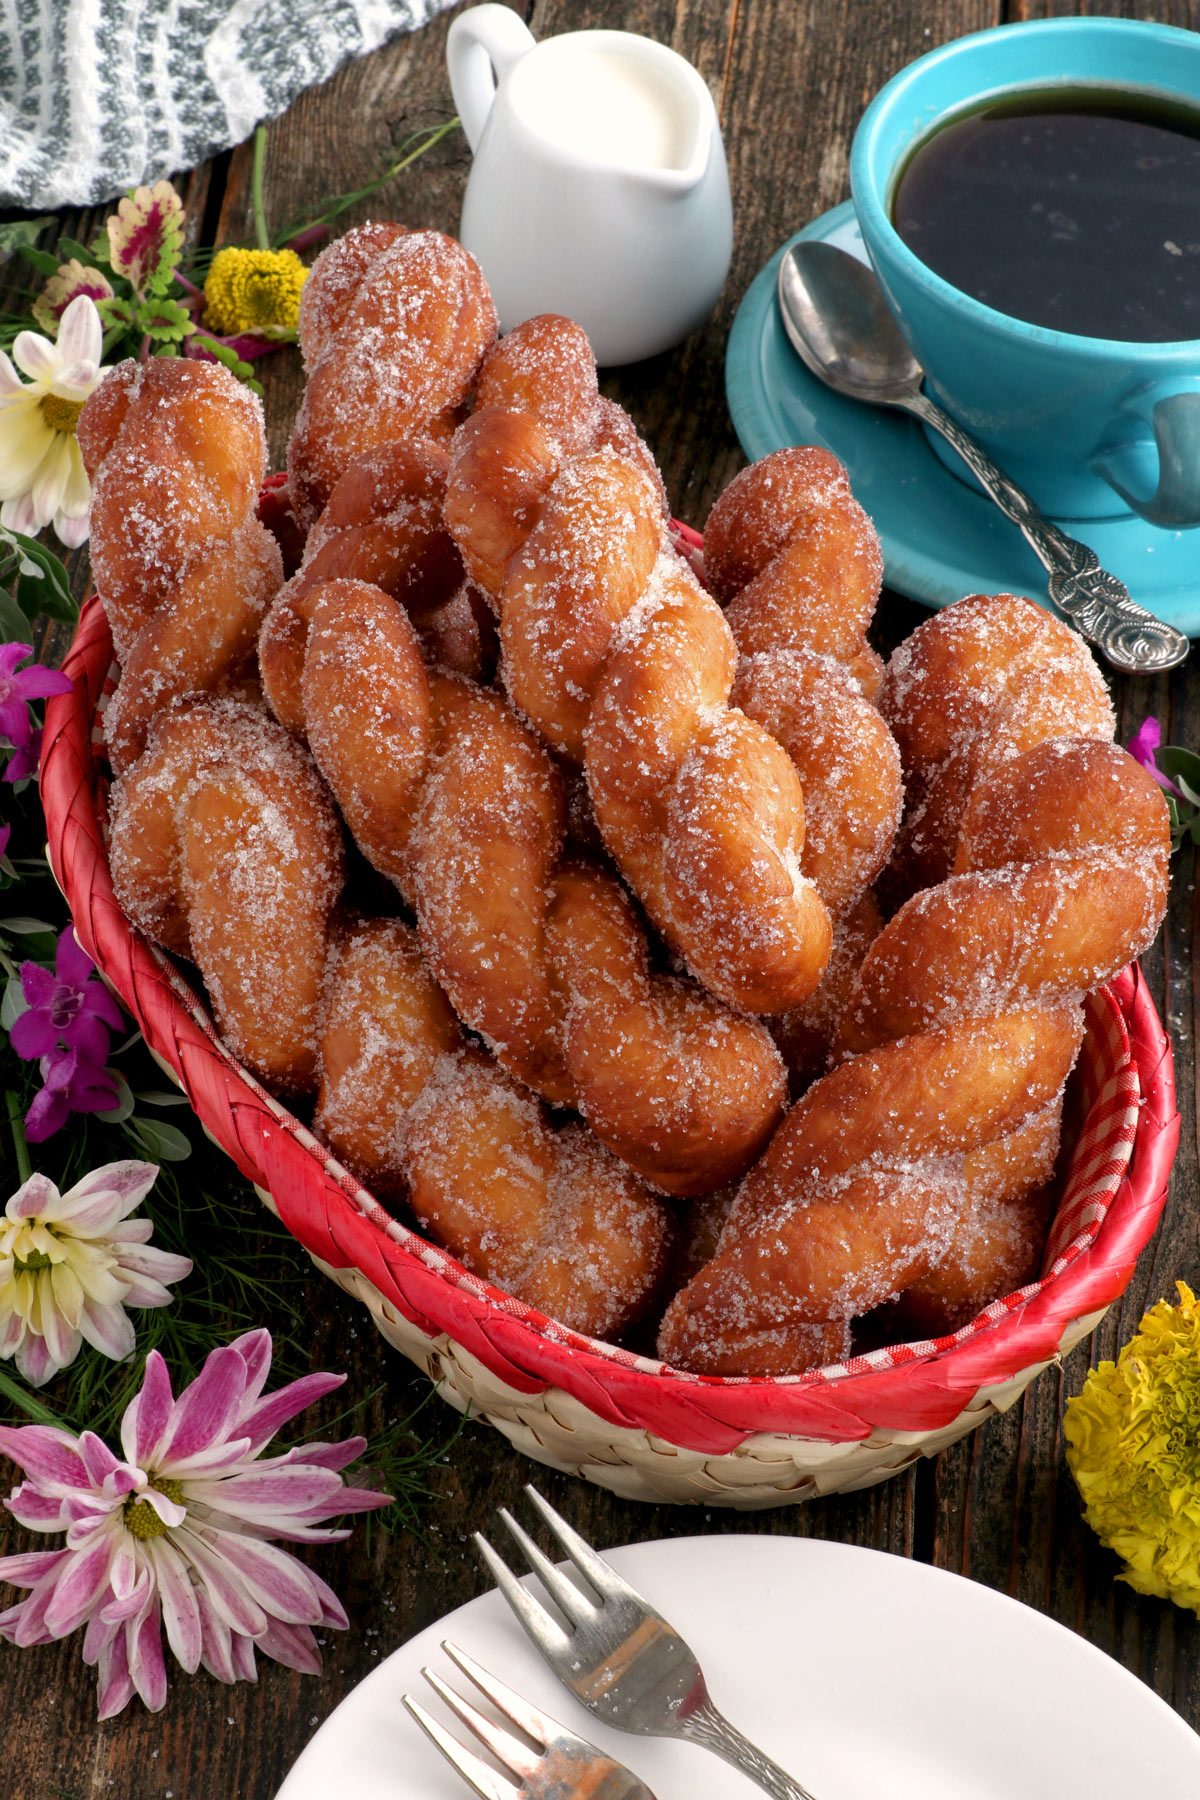 Bicho-bicho or Filipino twisted donuts